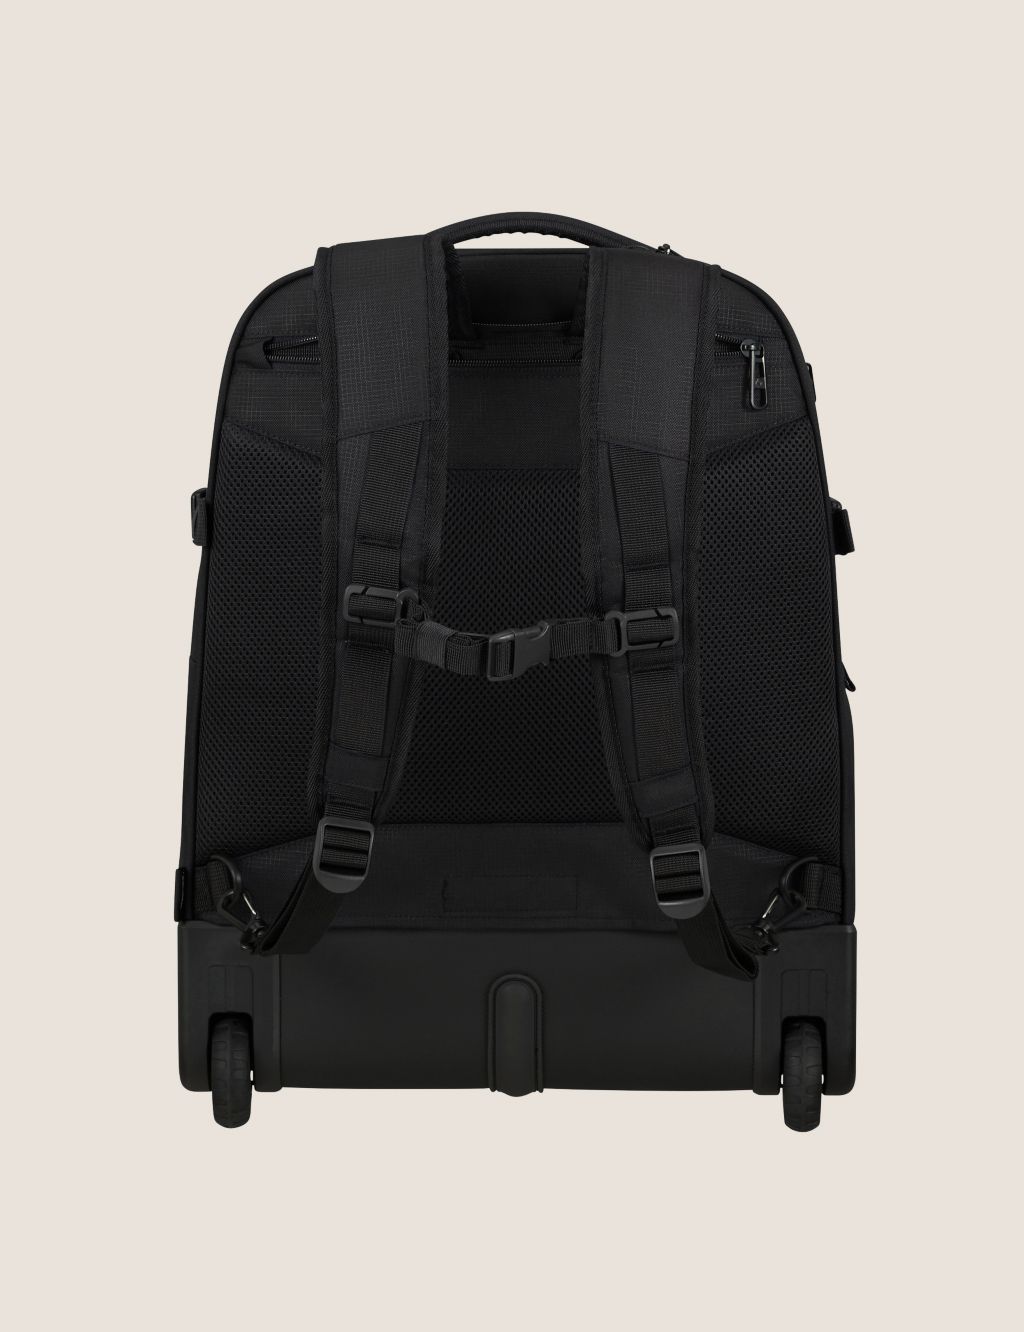 Roader 2 Wheel Laptop Backpack Suitcase image 2